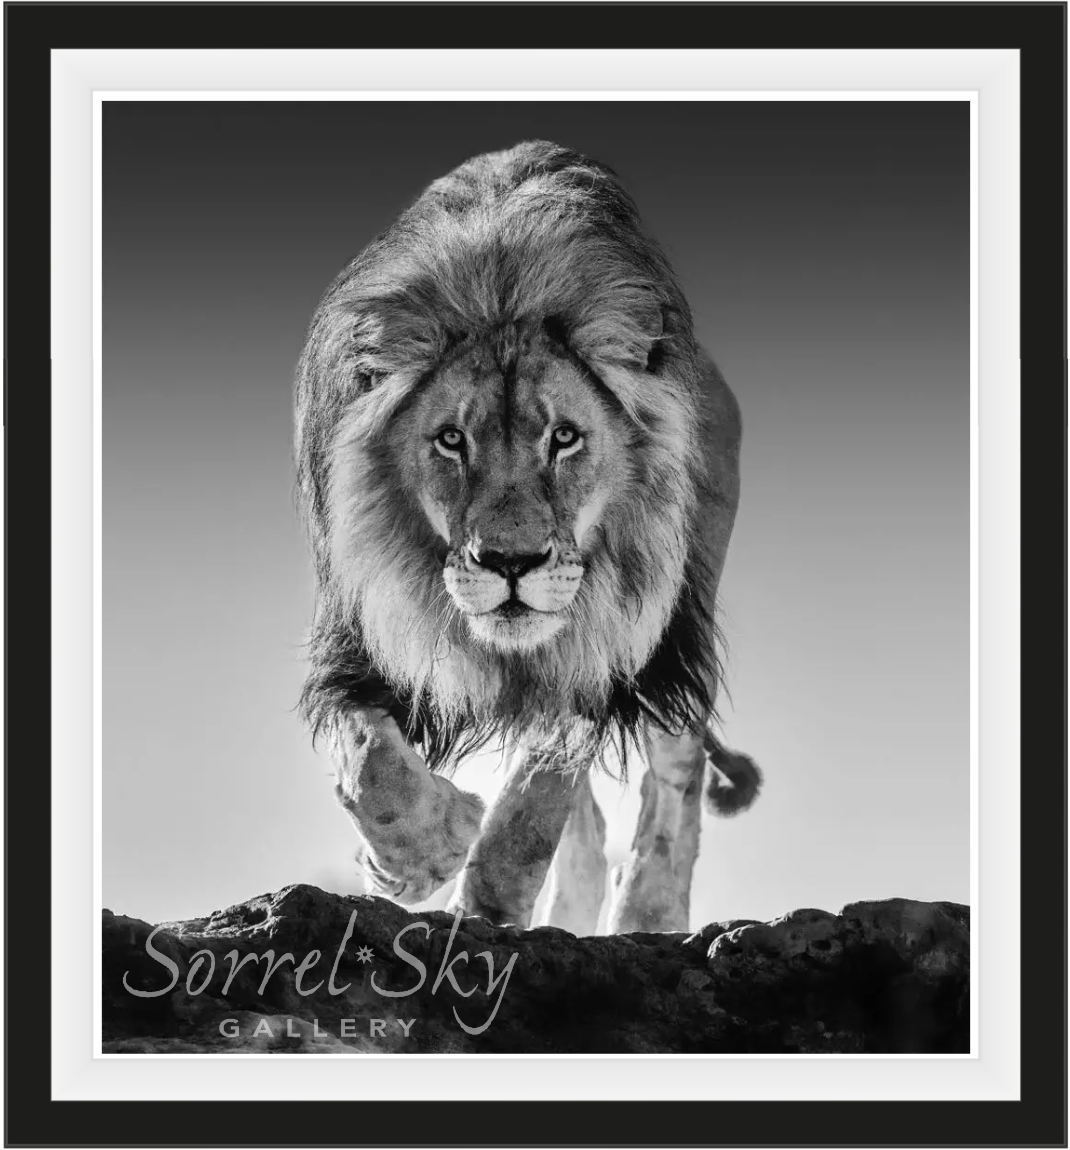 Genesis-Photographic Print-David Yarrow-Sorrel Sky Gallery